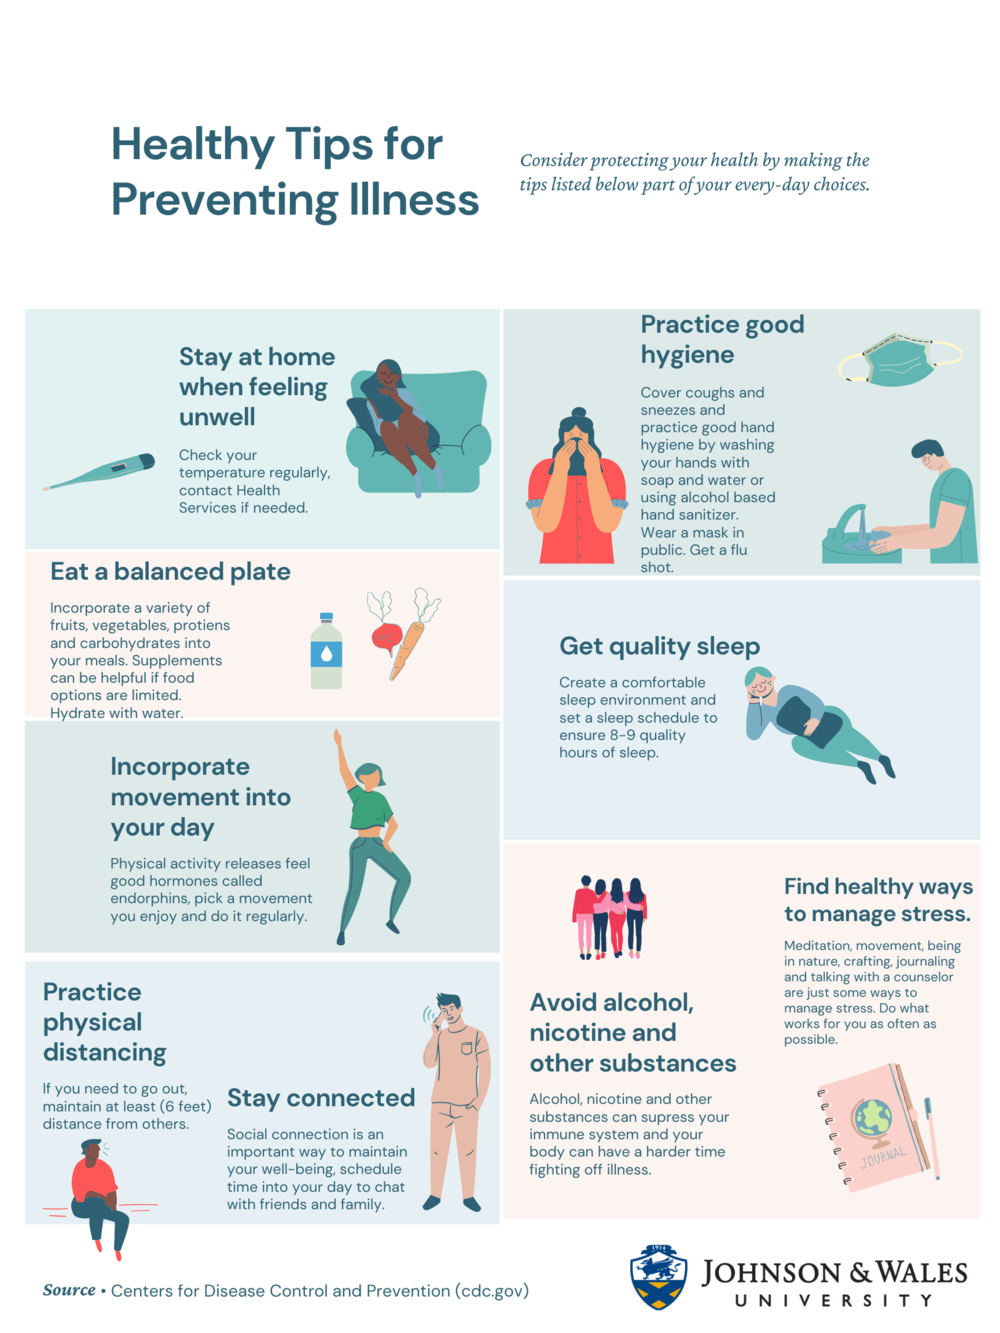 Tips for preventing illness